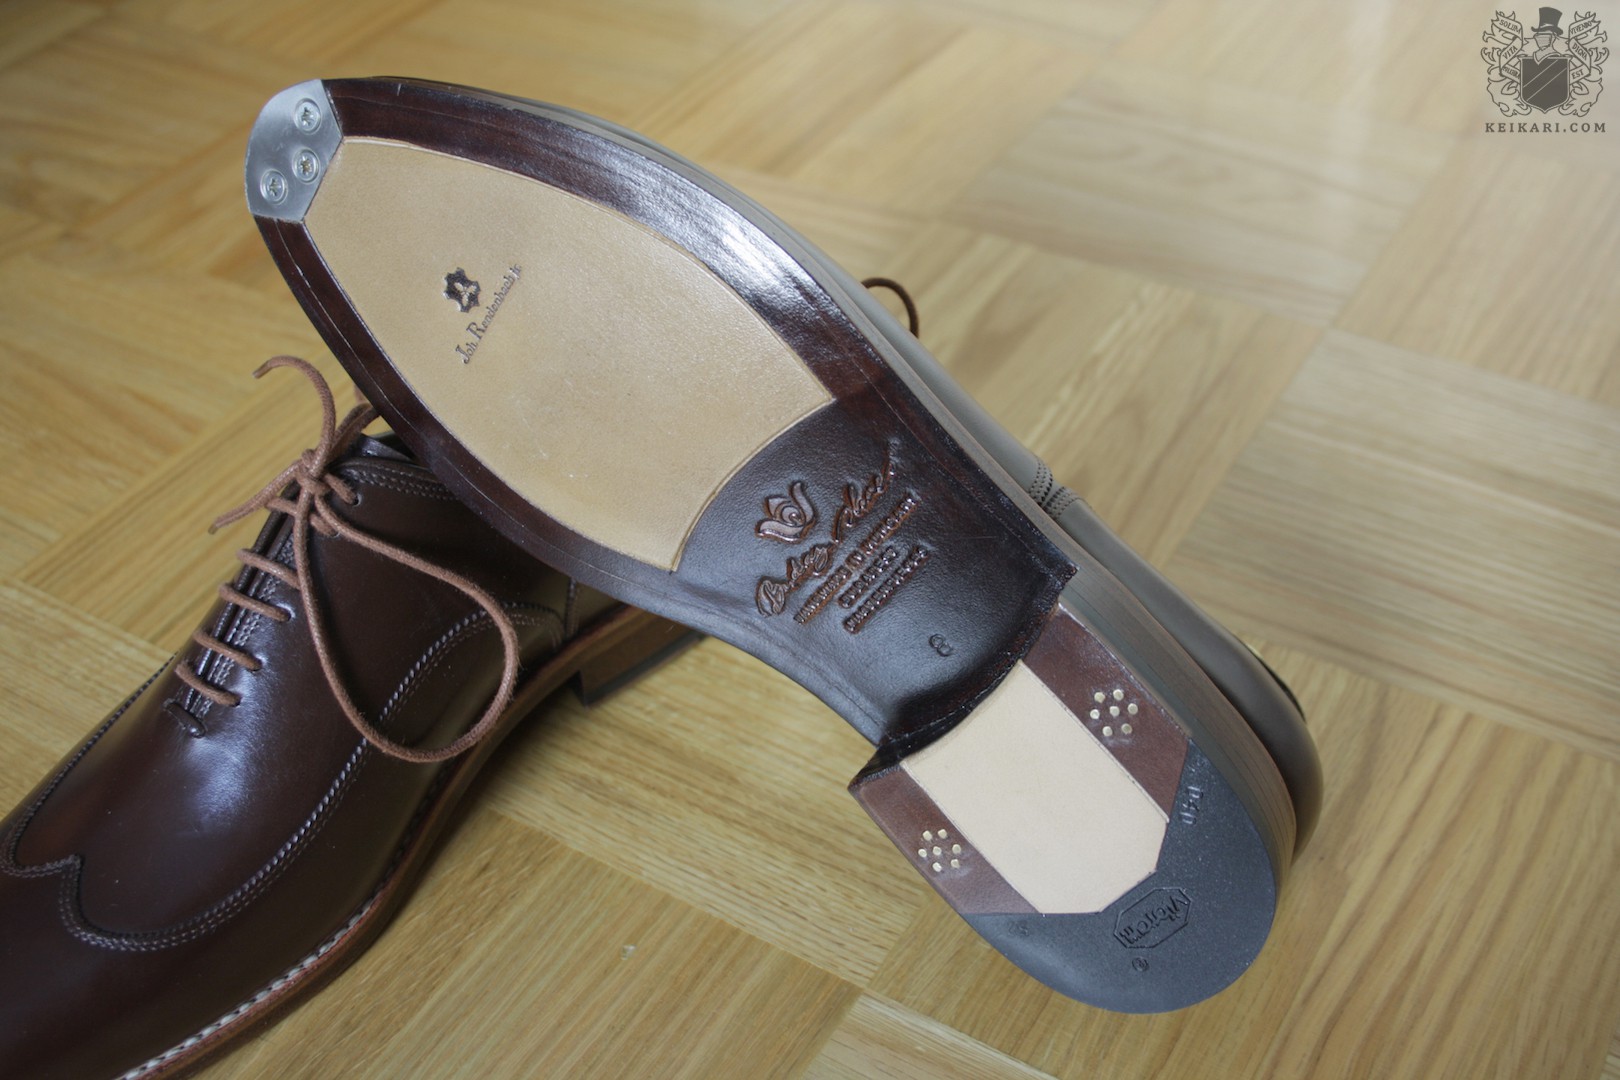 Buday_made_to_measure_shoes_at_Keikari_dot_com15